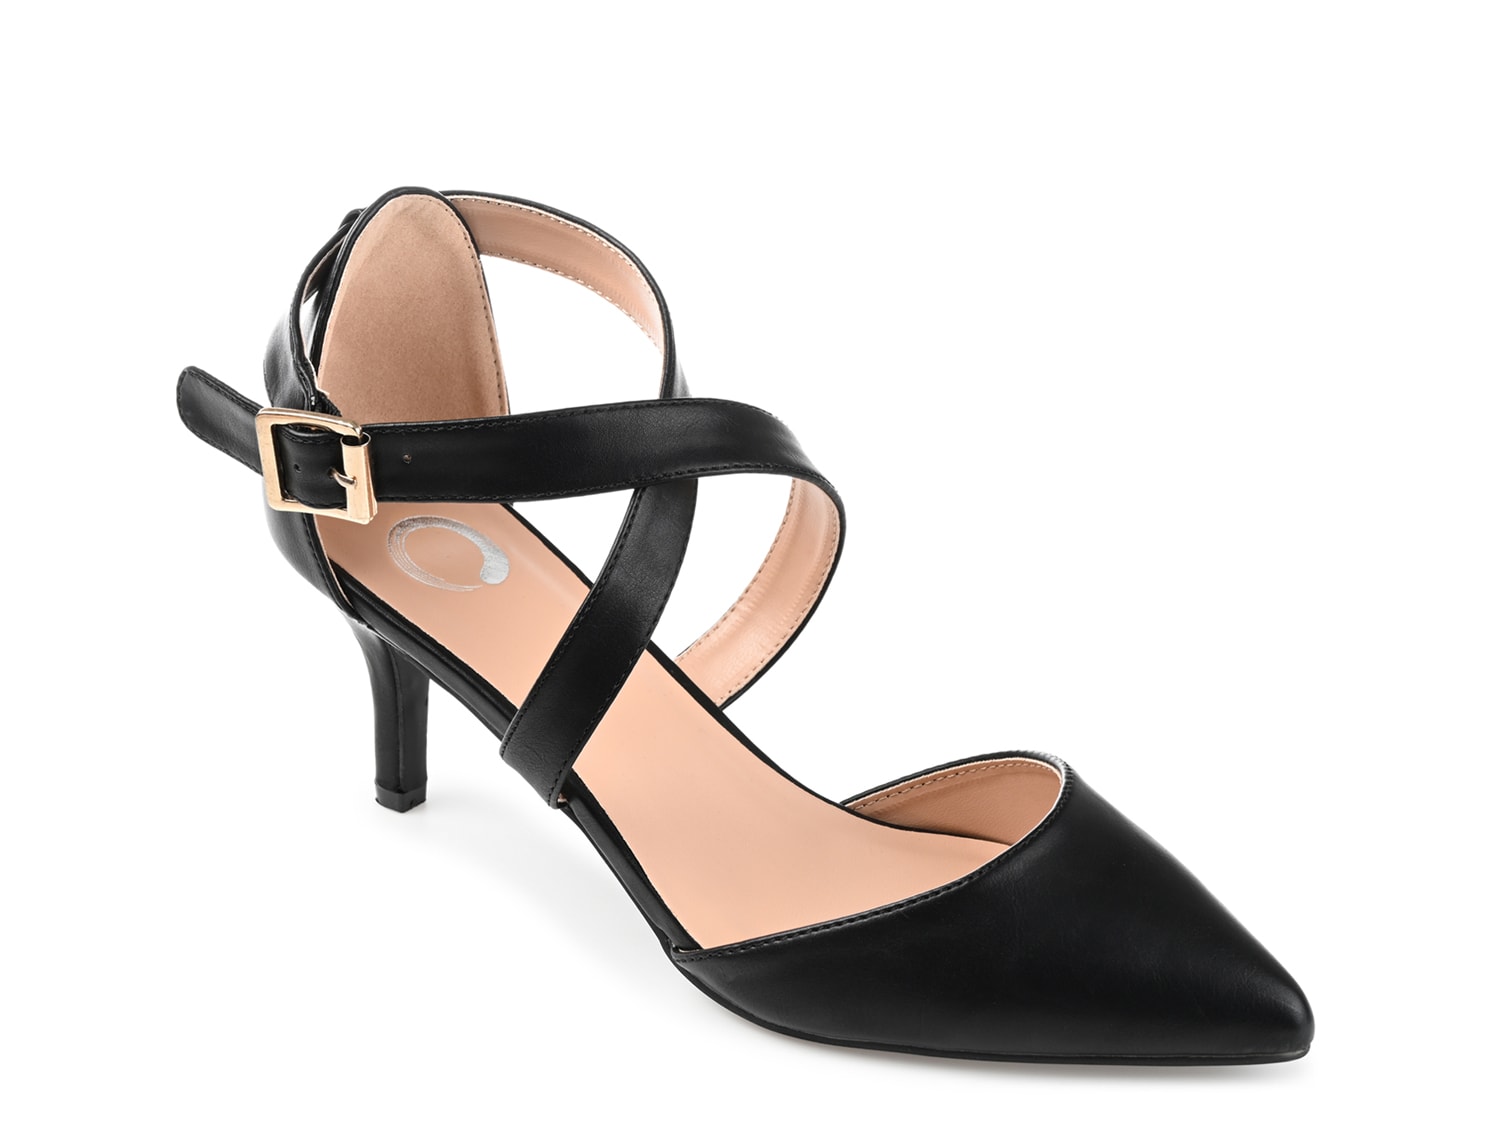 strappy black heels | DSW